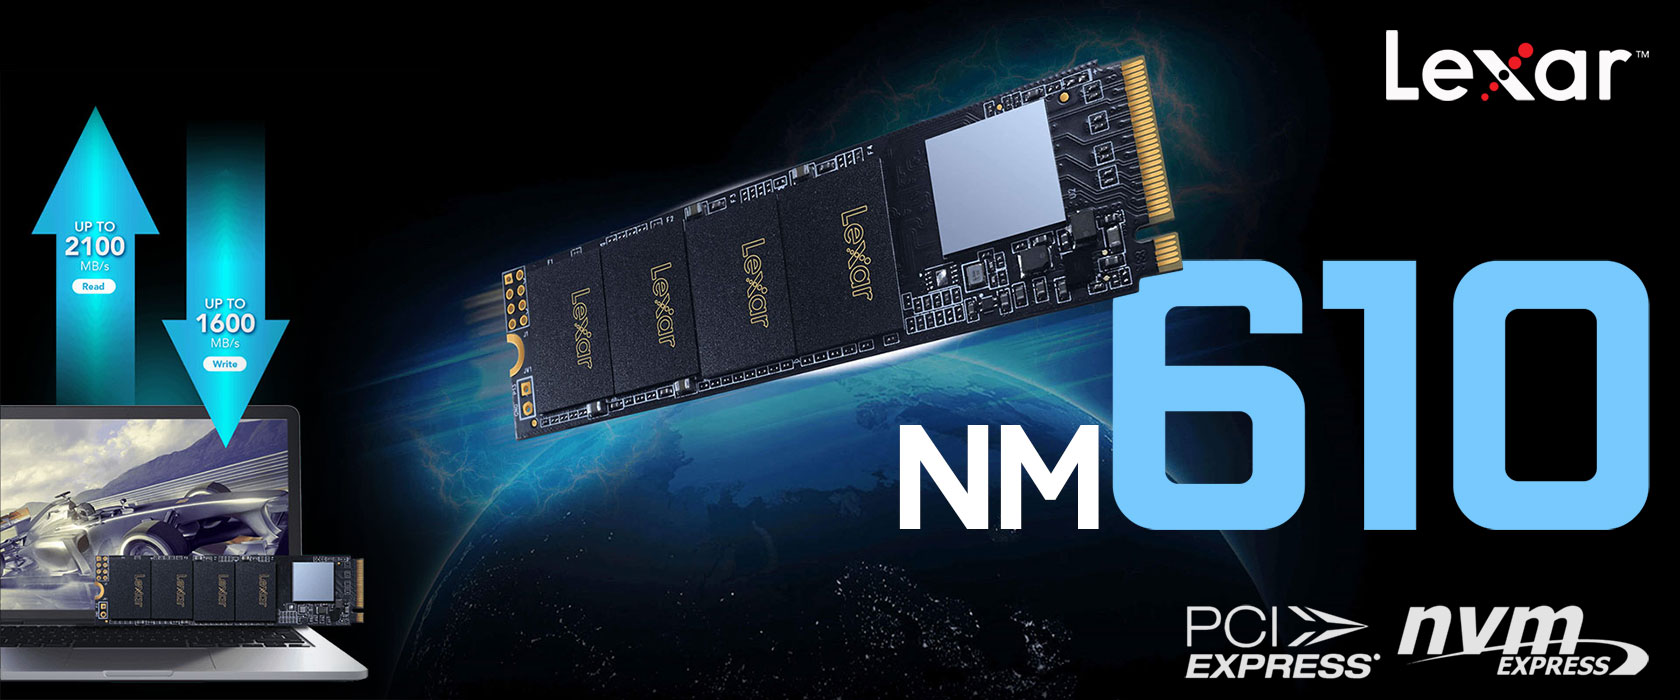 Lexar NM610 M.2 PCIe Gen3x4 NVMe 500GB